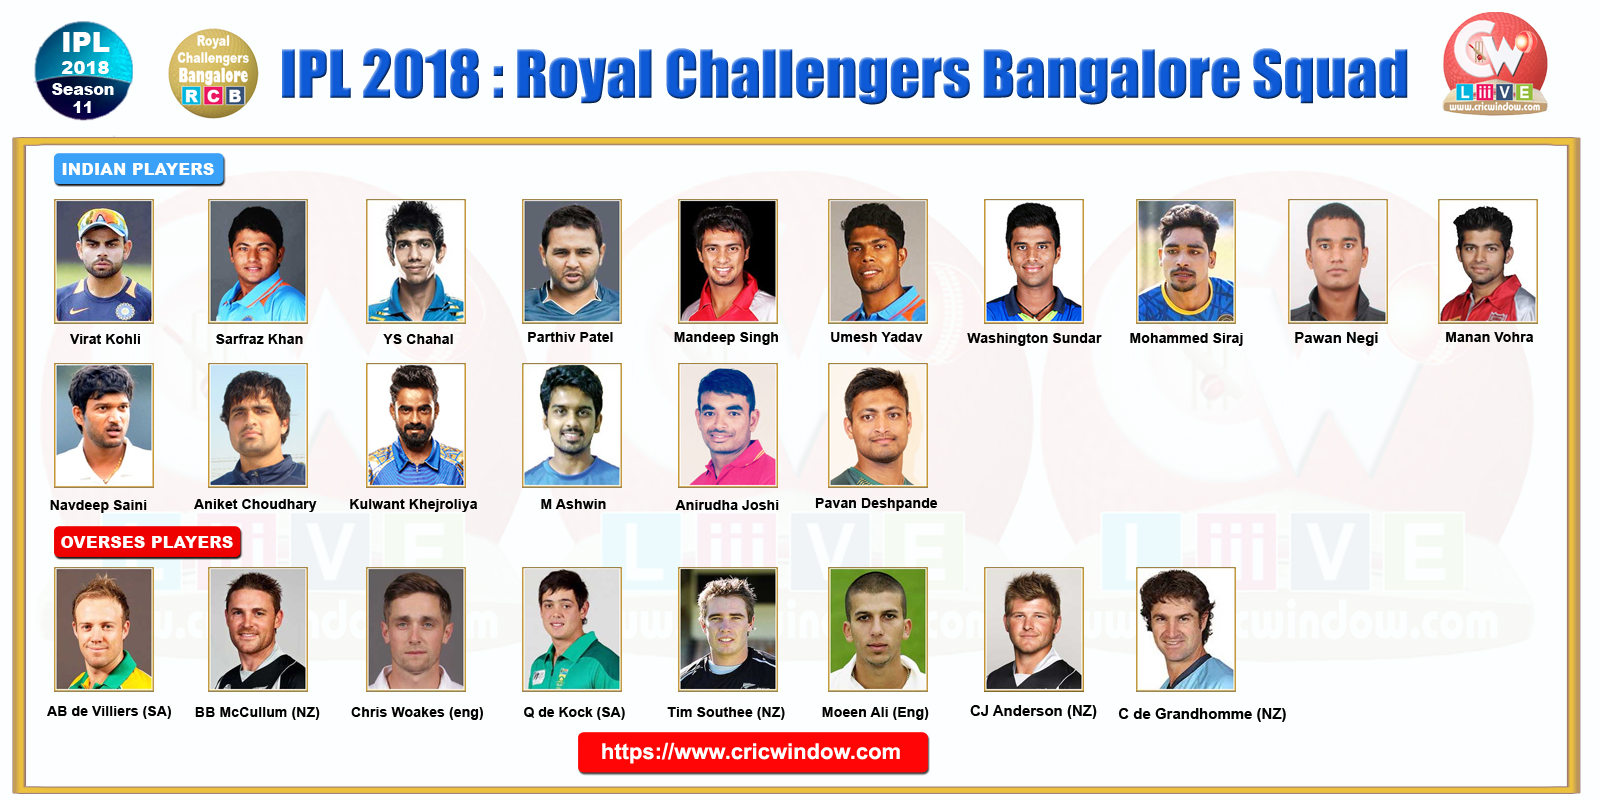 IPLT20 Bangalore Squad 2018